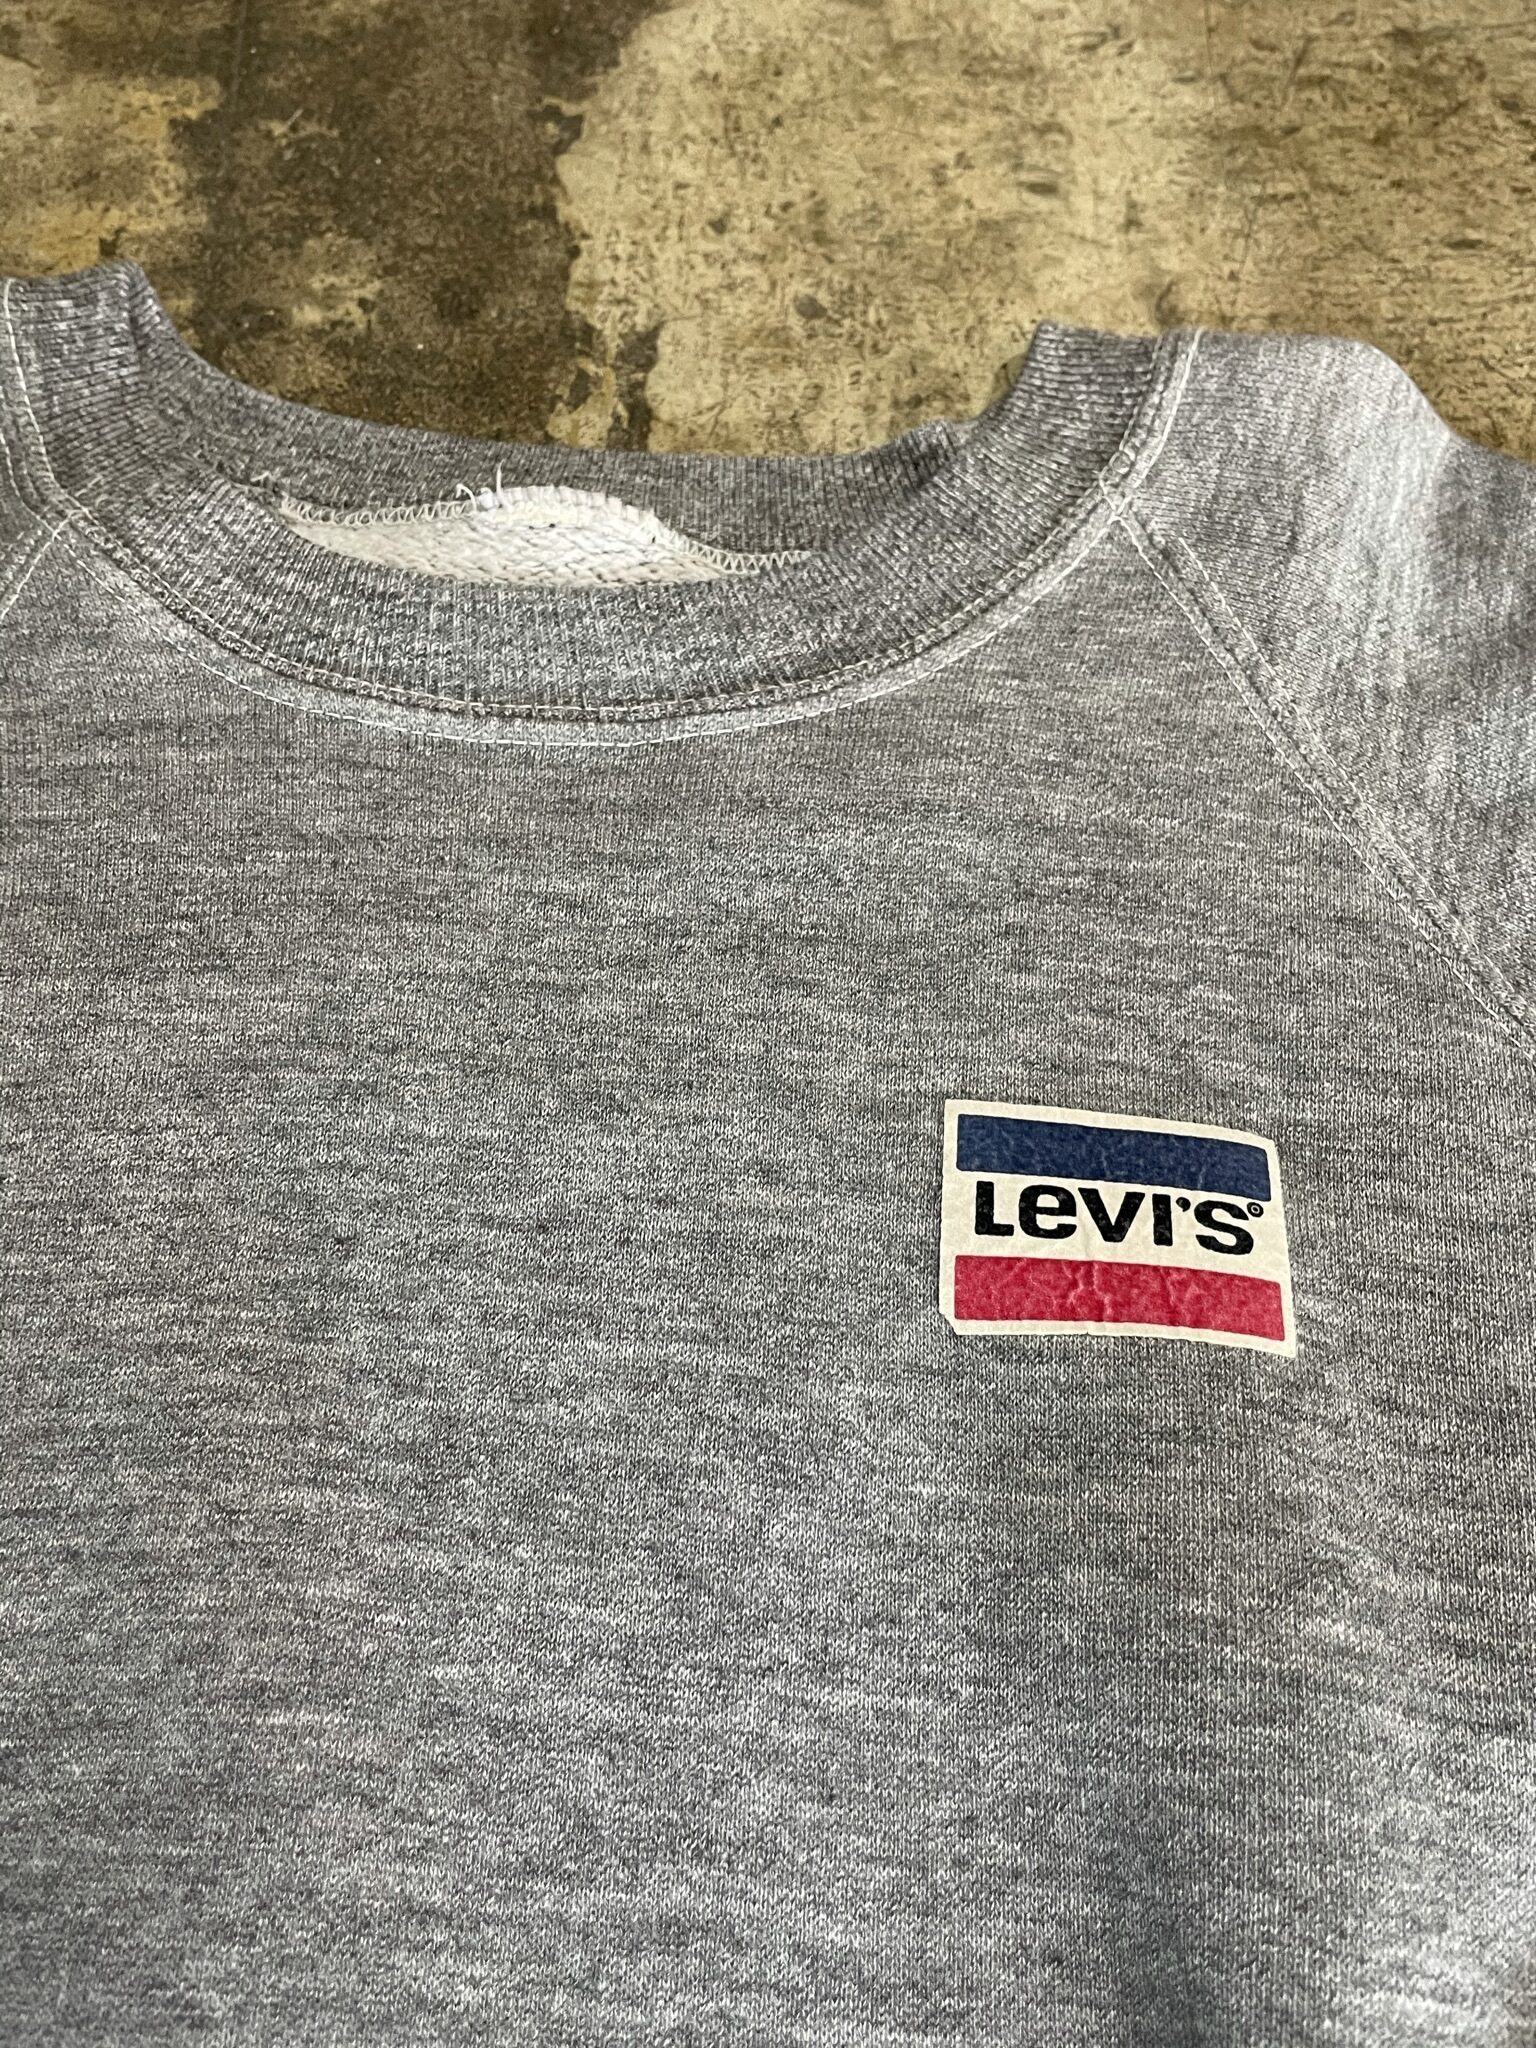 80's Levi's sweatshirt リーバイス スウェットシャツ 80年代 古着 us